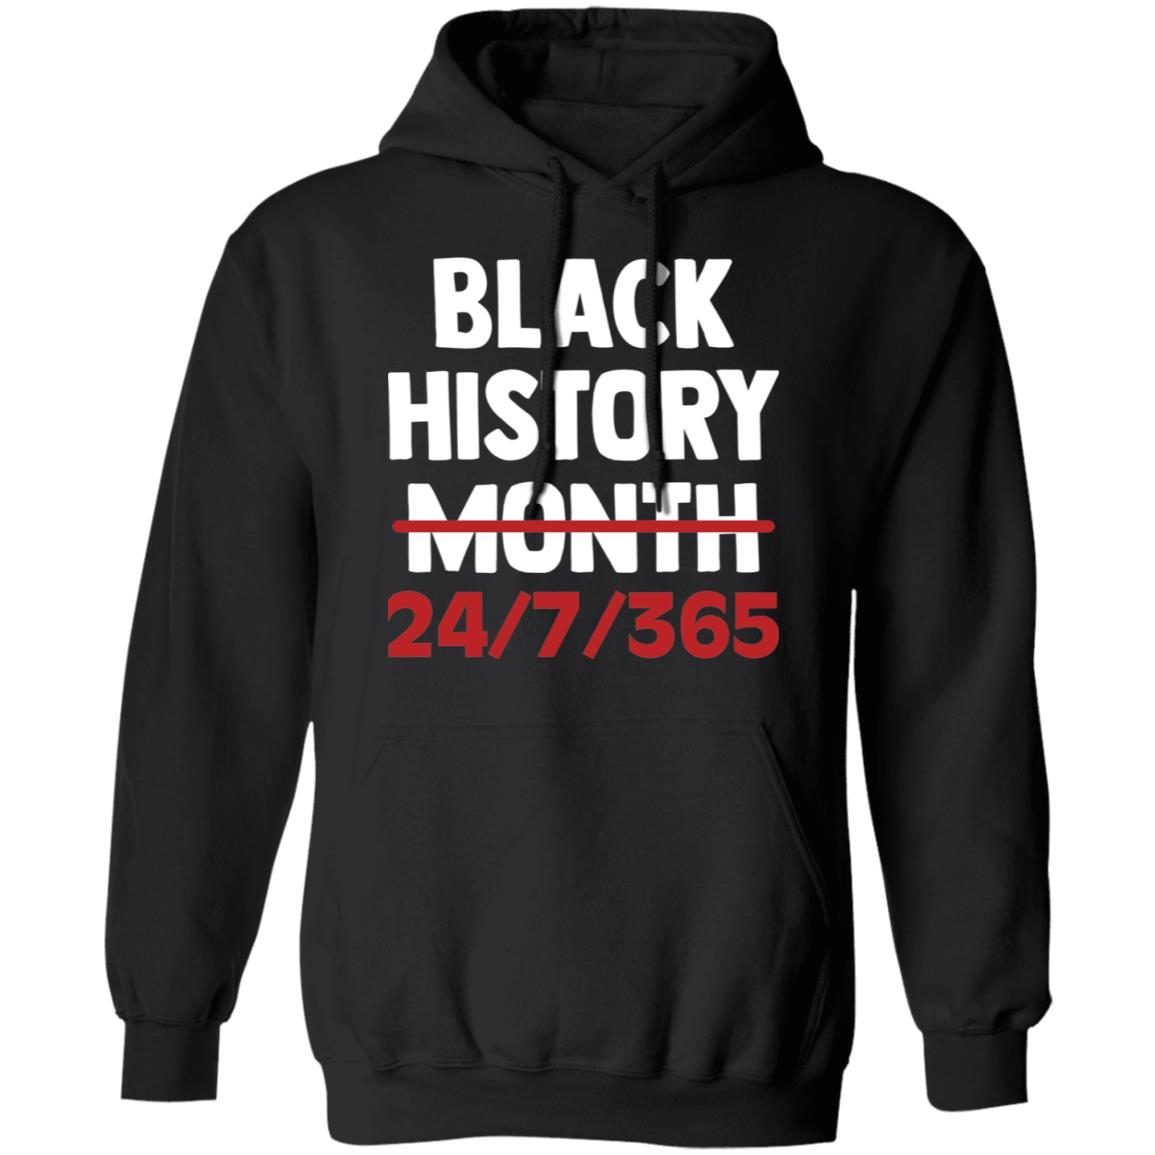 Black history month 24/7/365 shirt 4